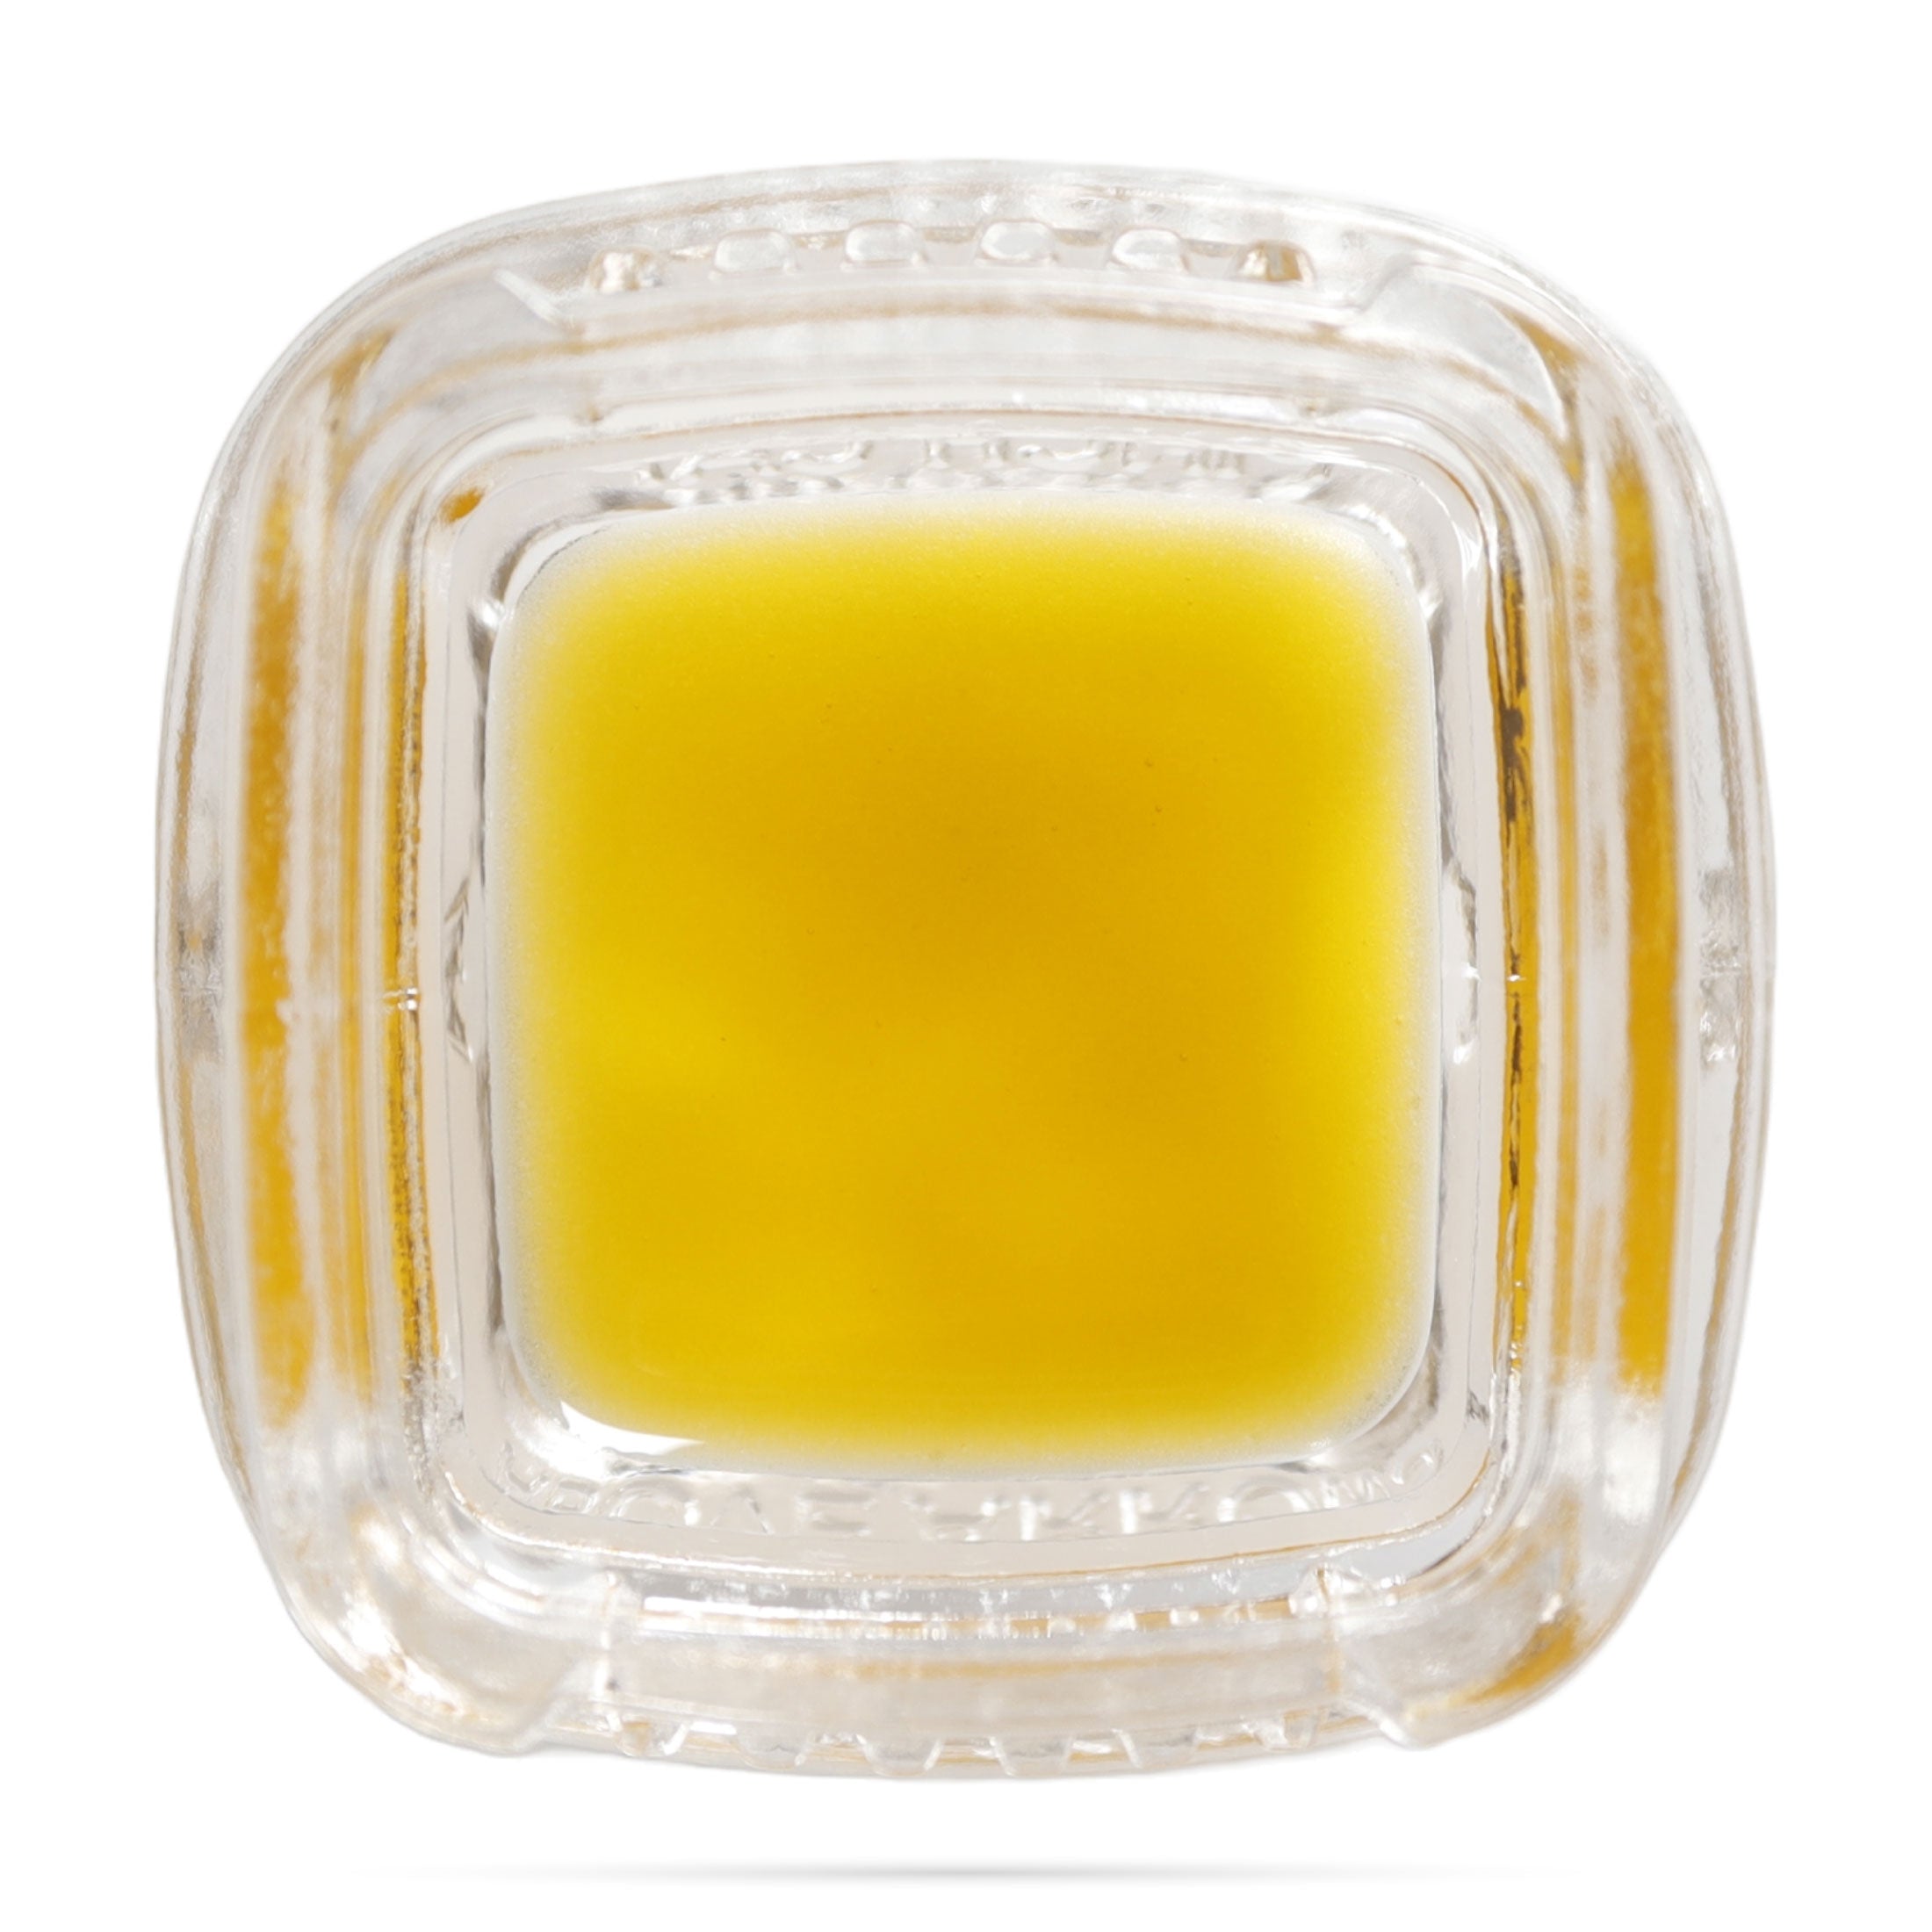 Image of Super Sour Space Candy CBD Live Resin 1 gram jar.